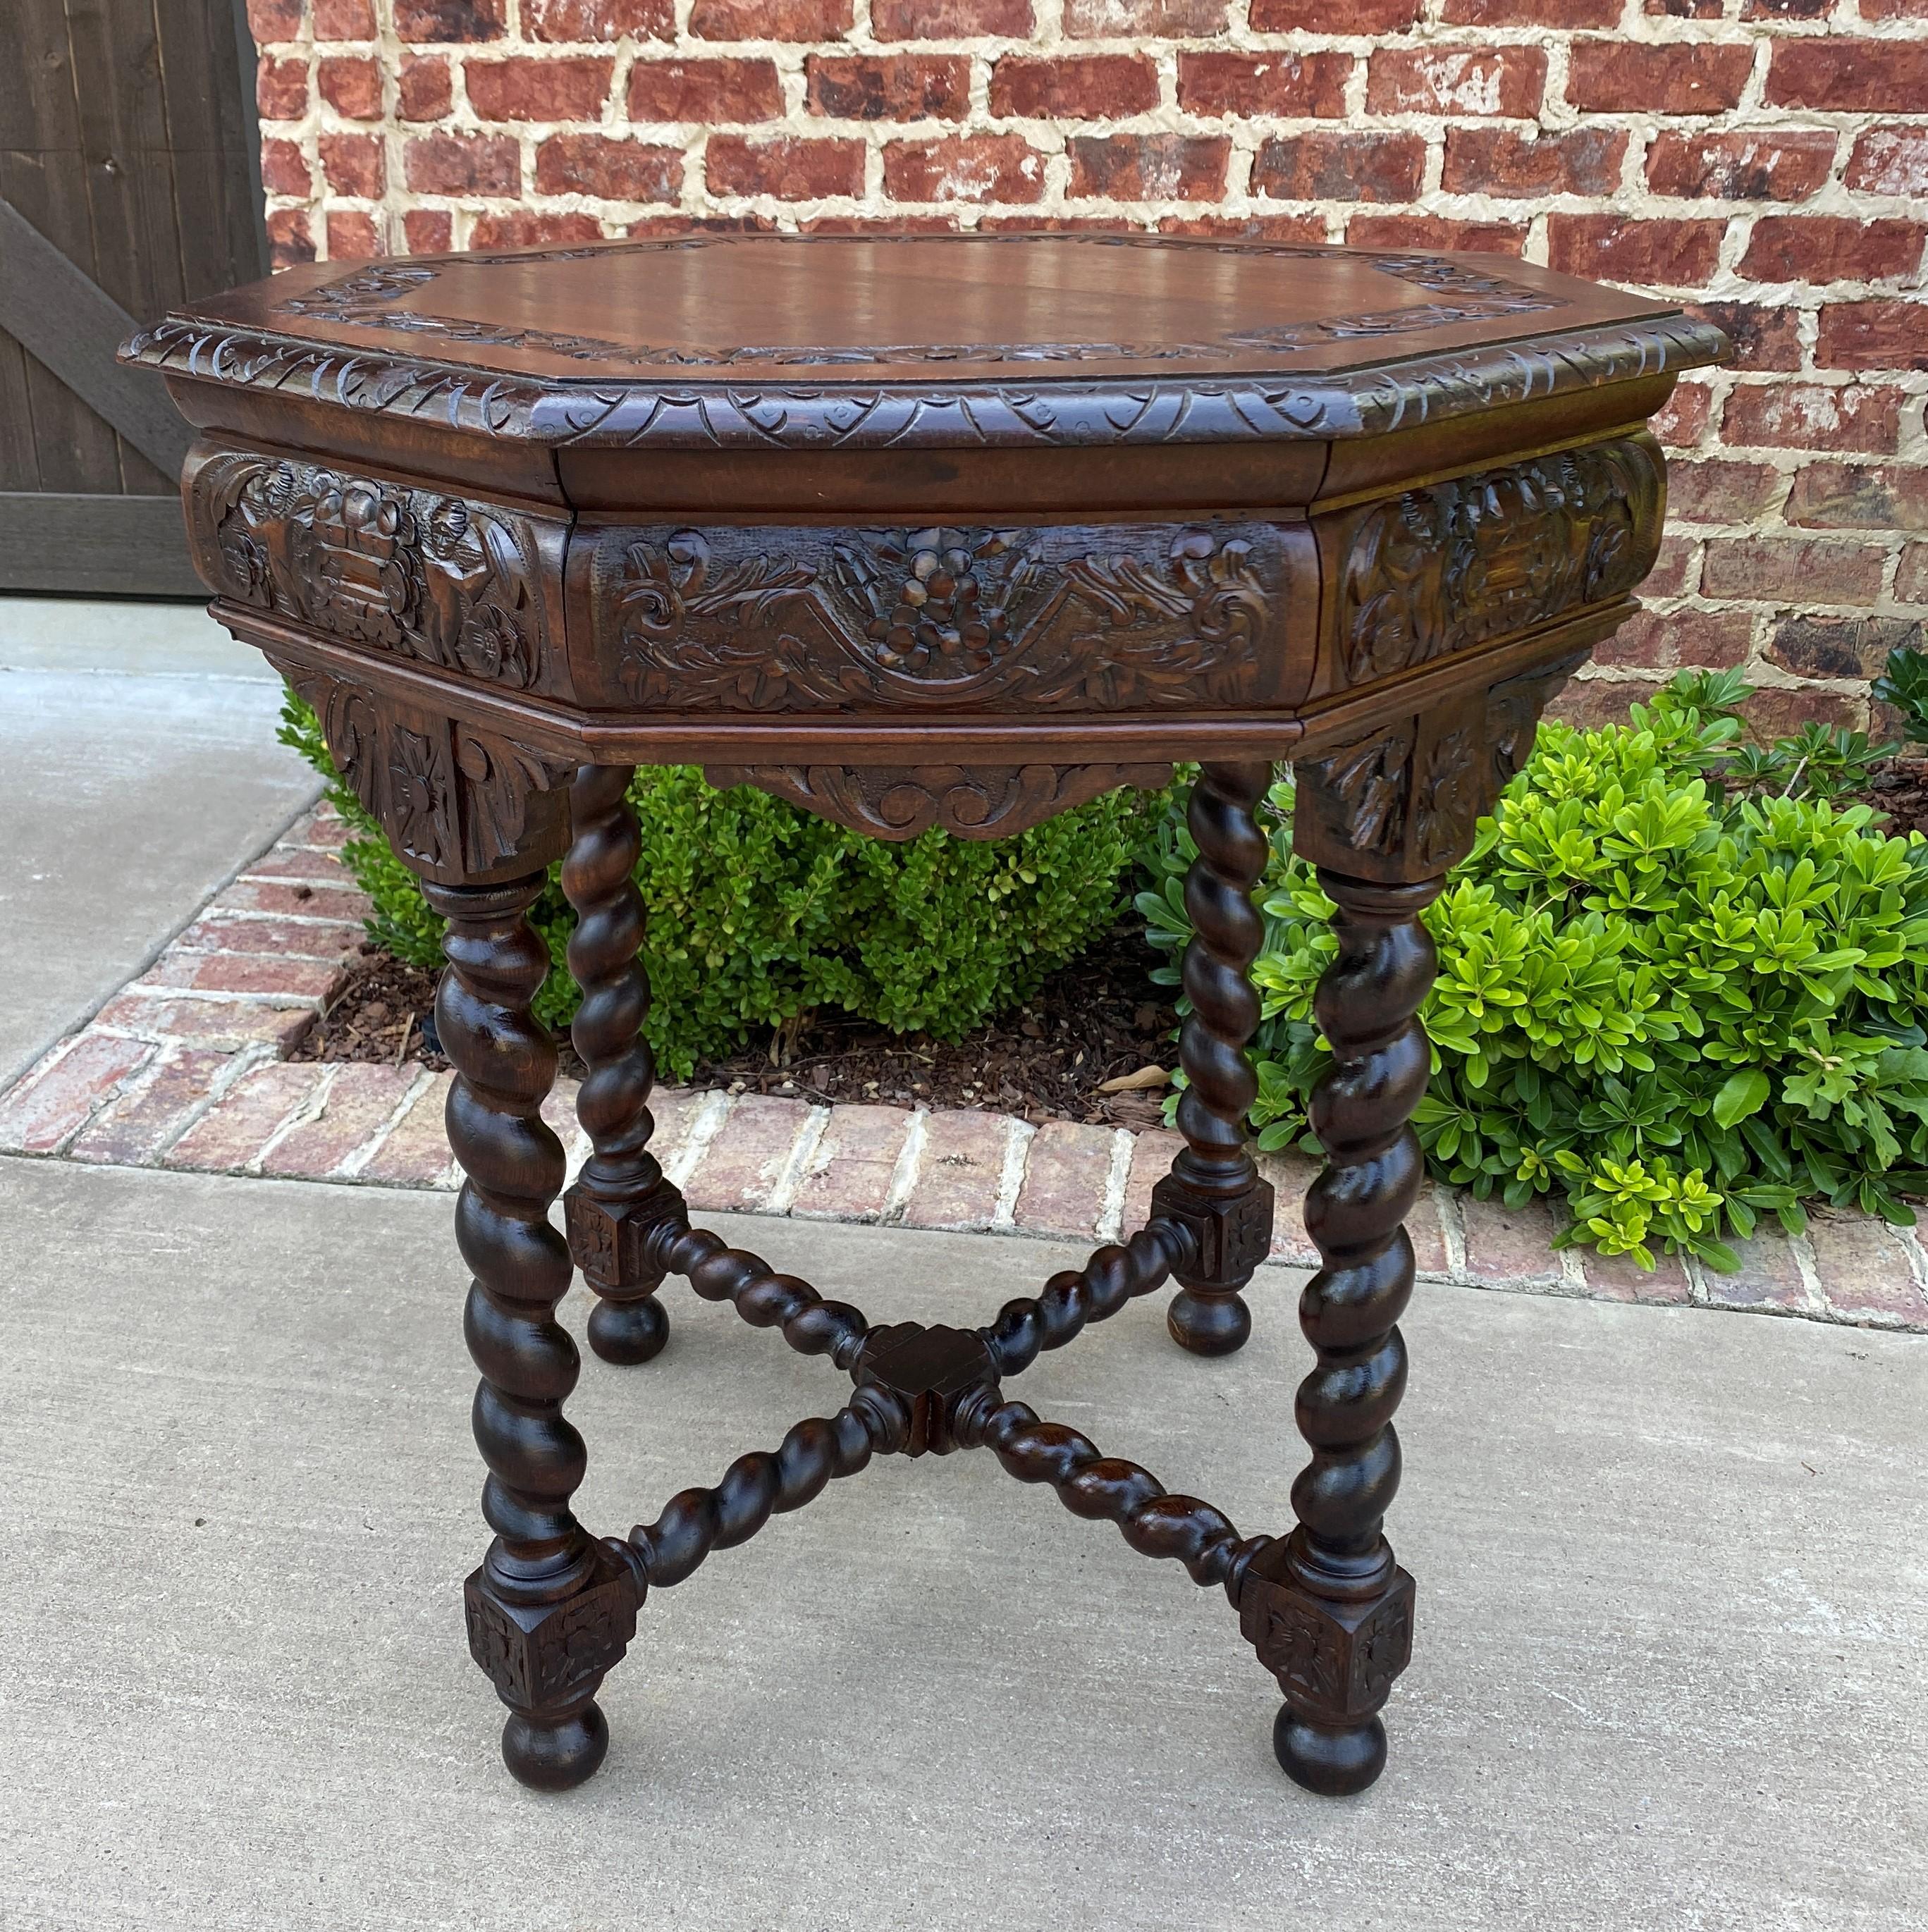 Antique French Table Barley Twist Octagonal Renaissance Revival Carved Oak 19thC 3